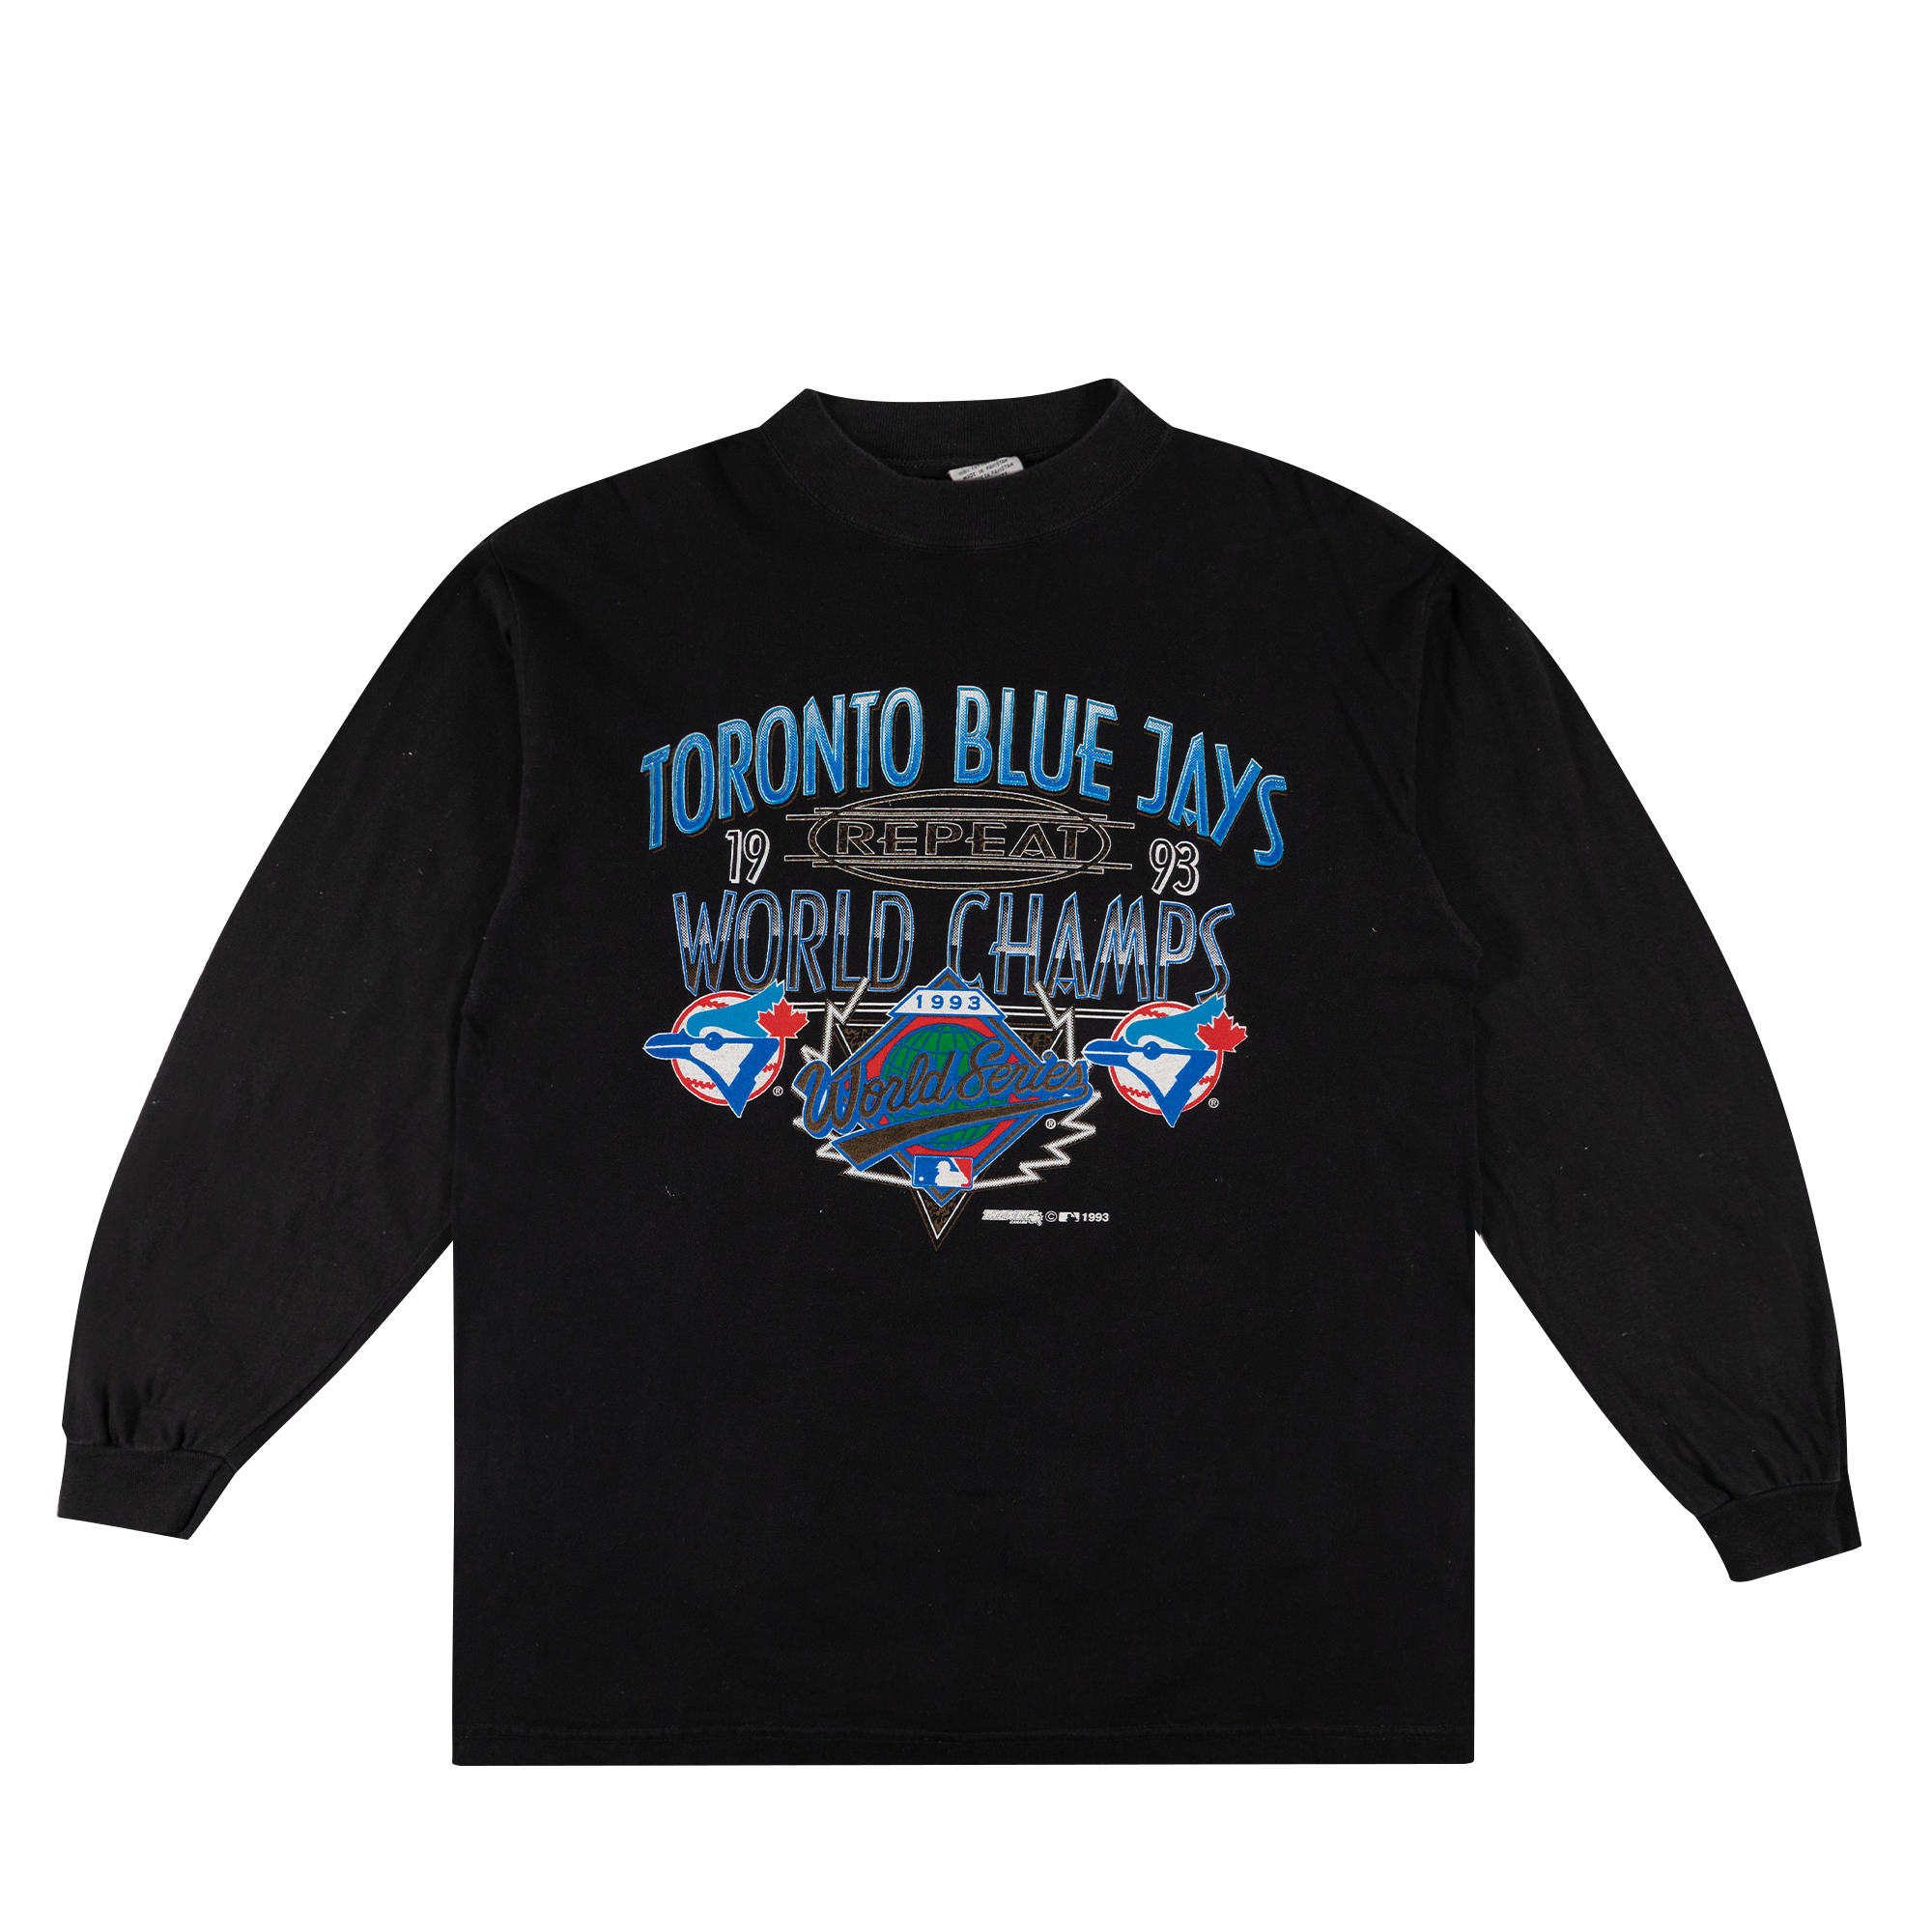 Toronto Blue Jays 1993 World Champs L/S Tee Black-PLUS